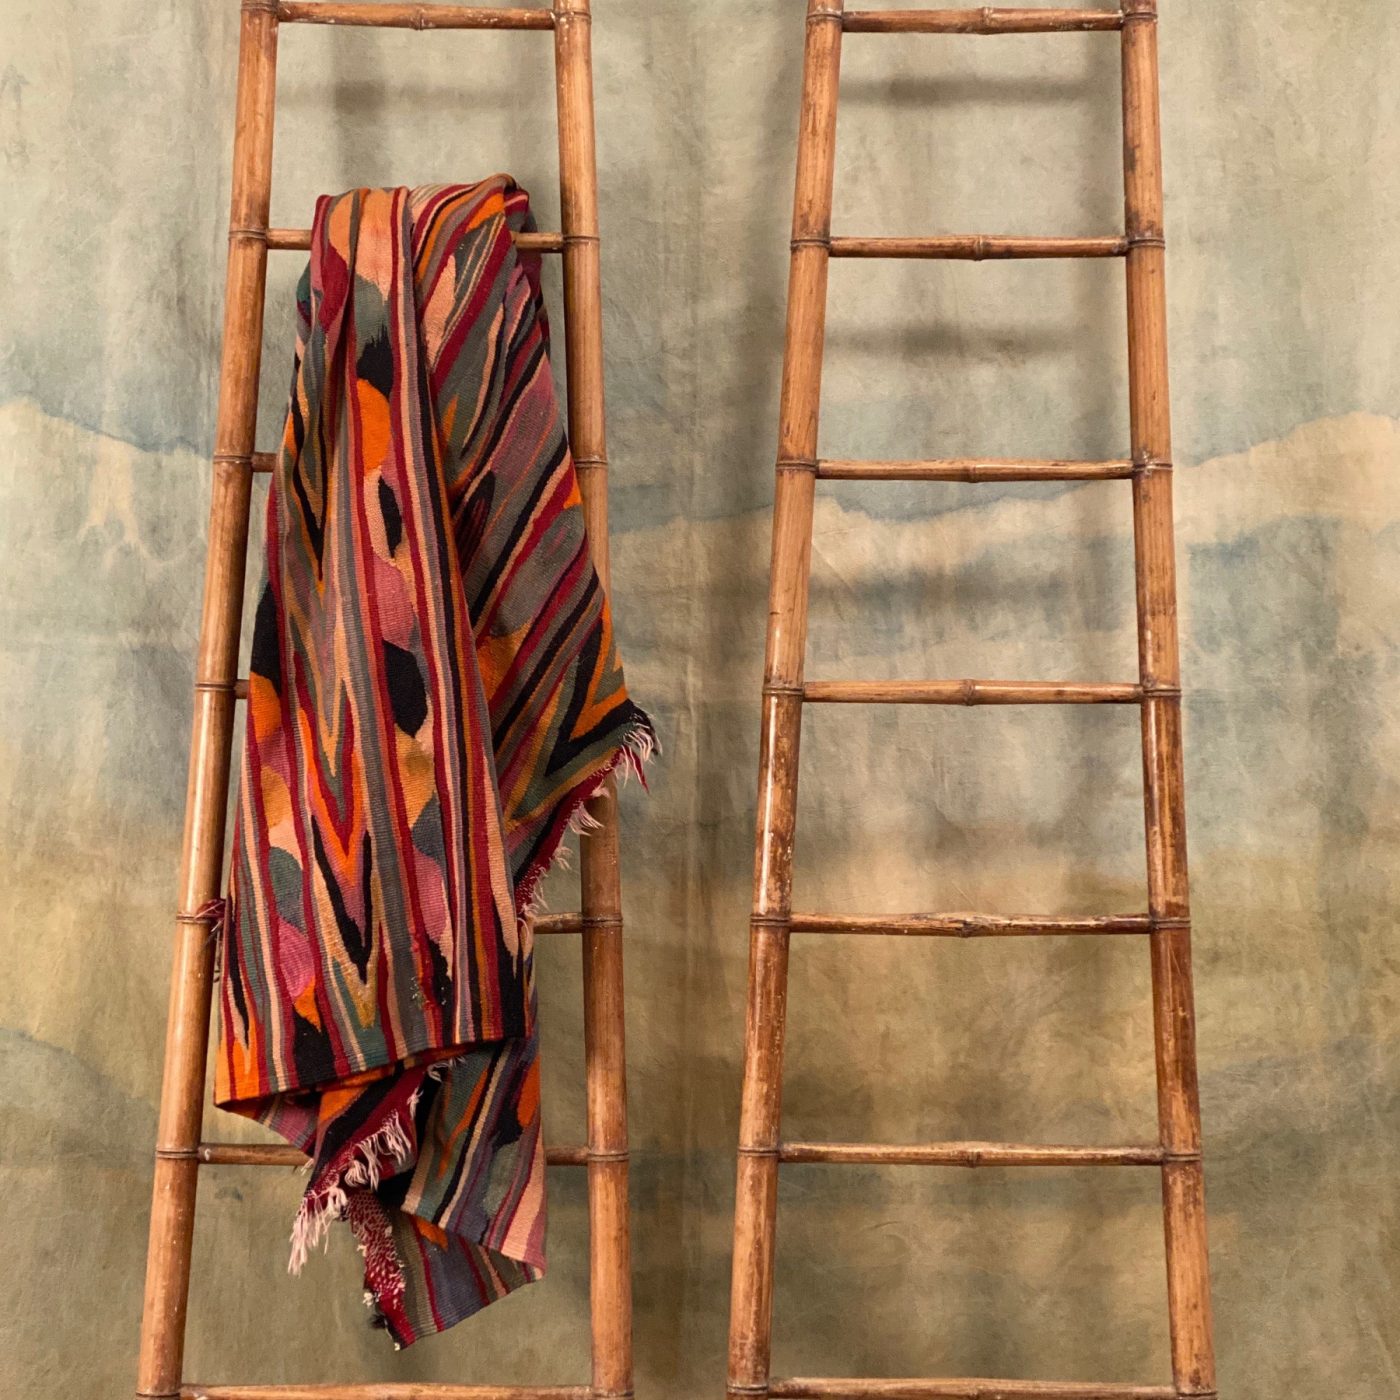 objet-vagabond-bamboo-ladders0007